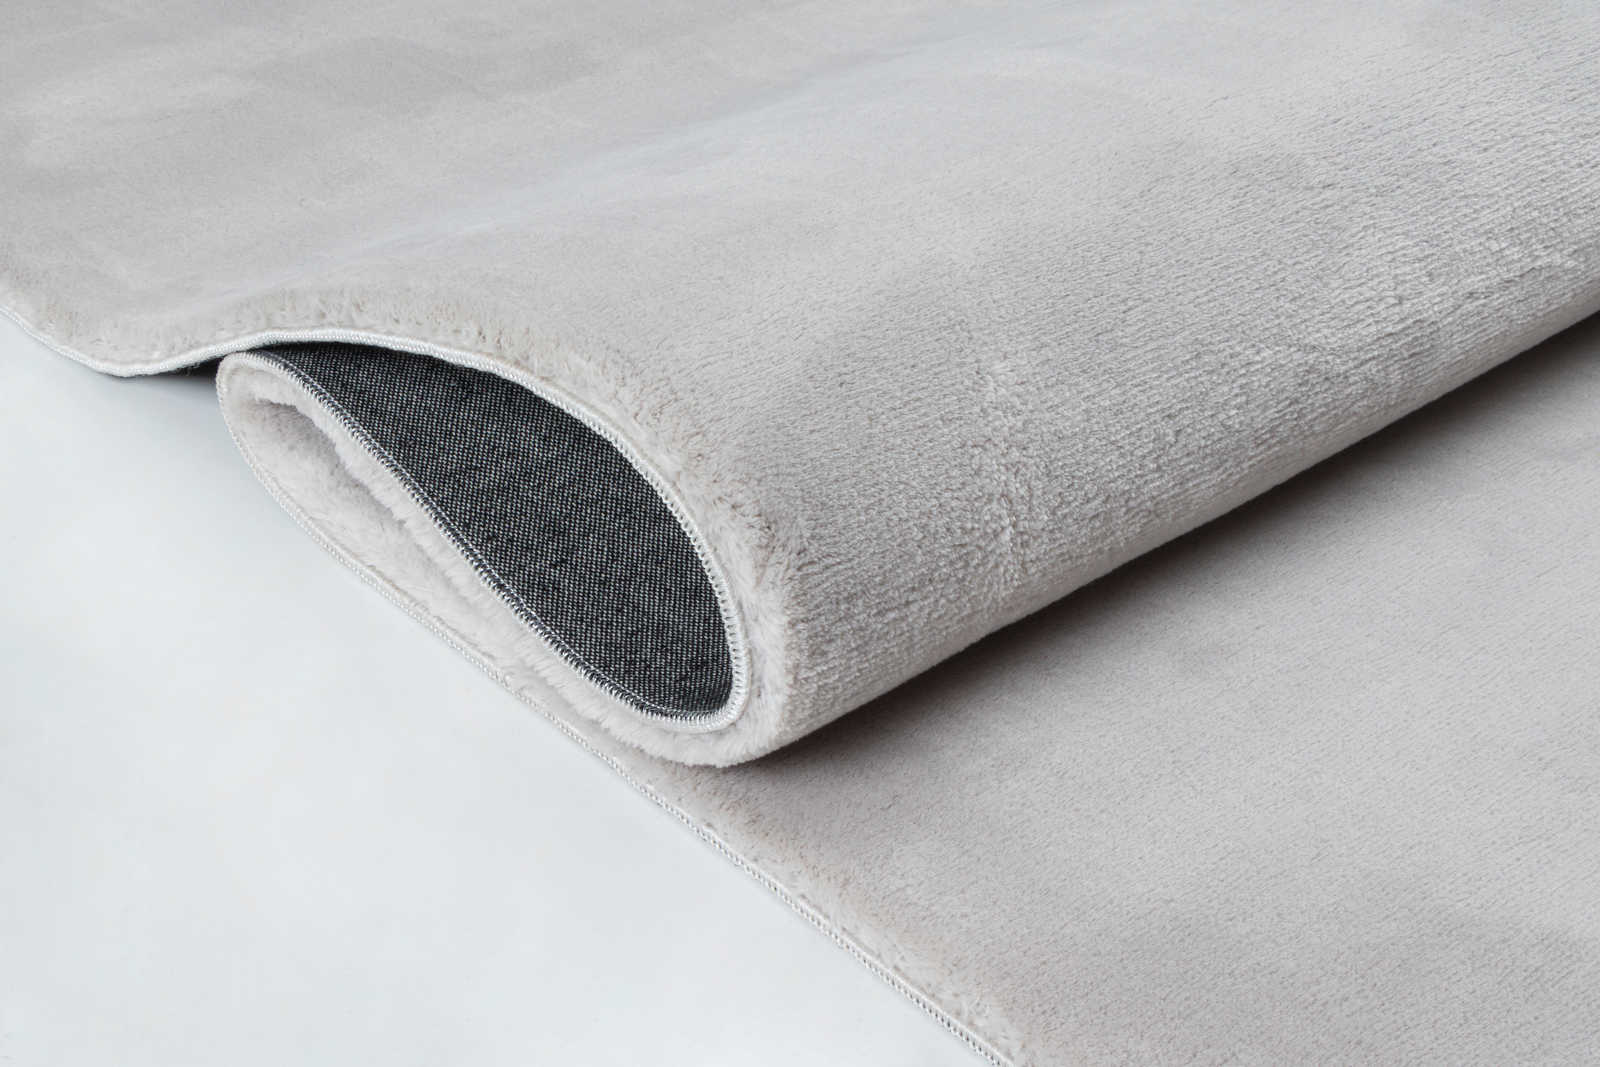             Acogedora alfombra de pelo alto en gris suave - 110 x 60 cm
        